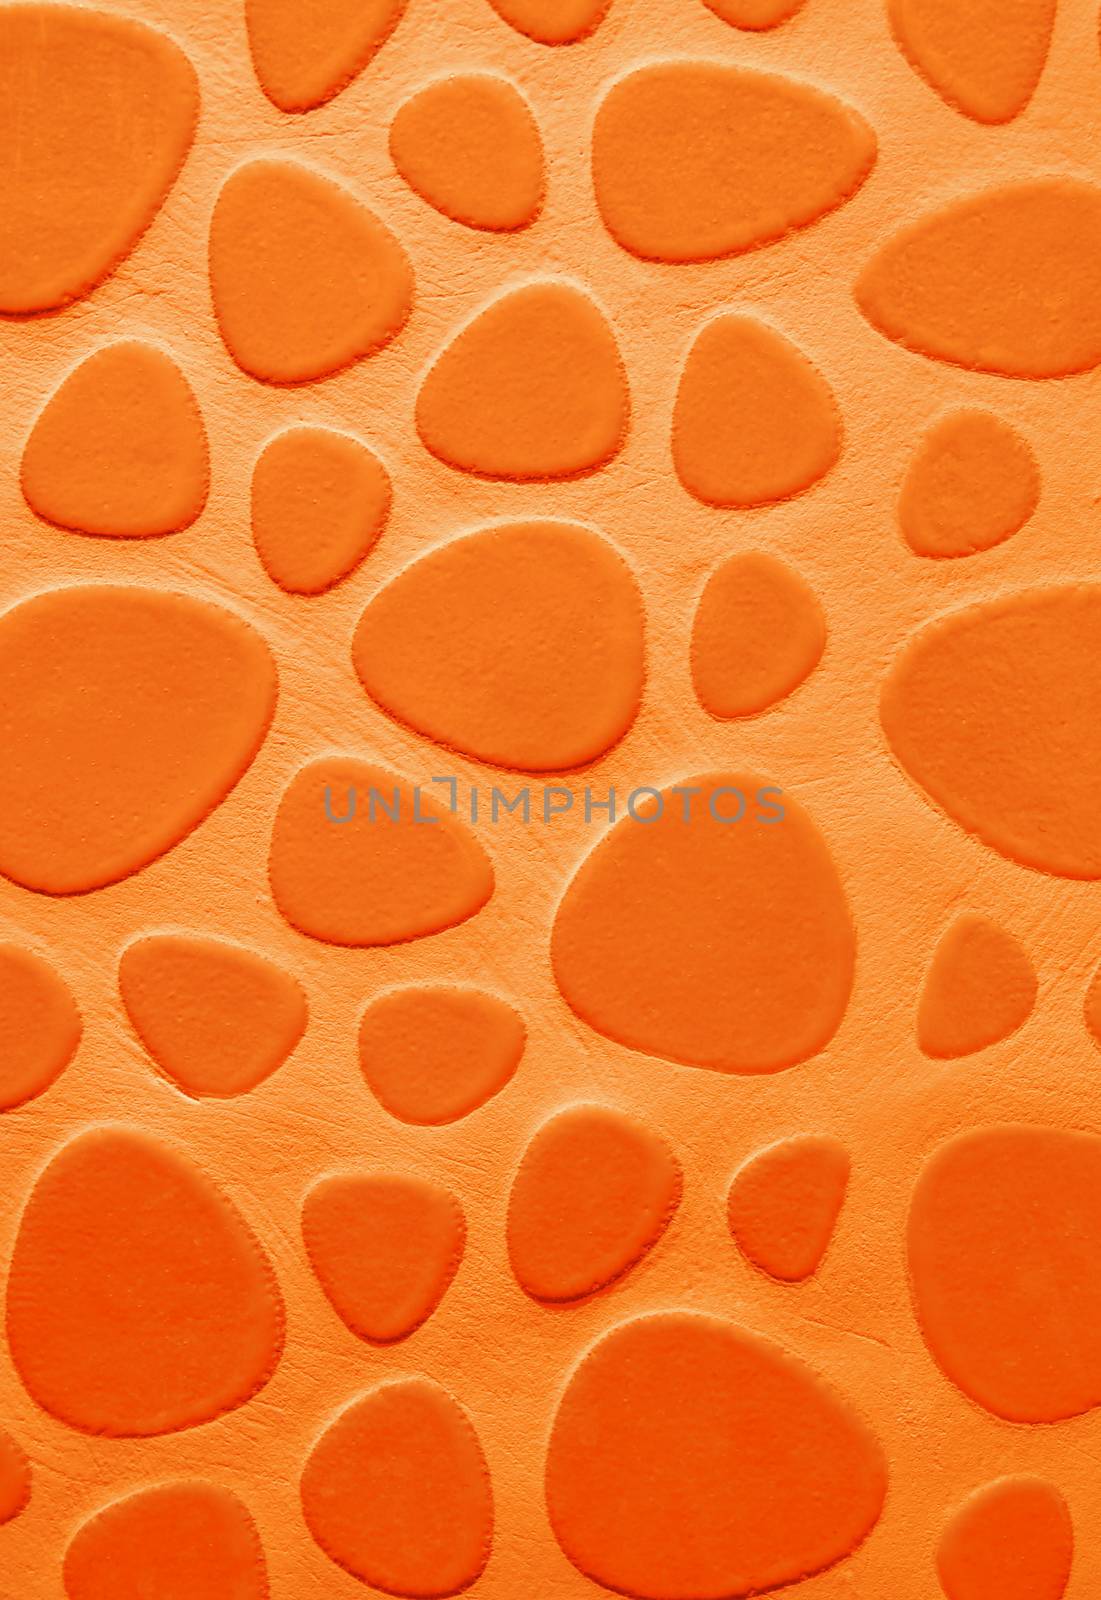 Orange Stone Background by zhekos